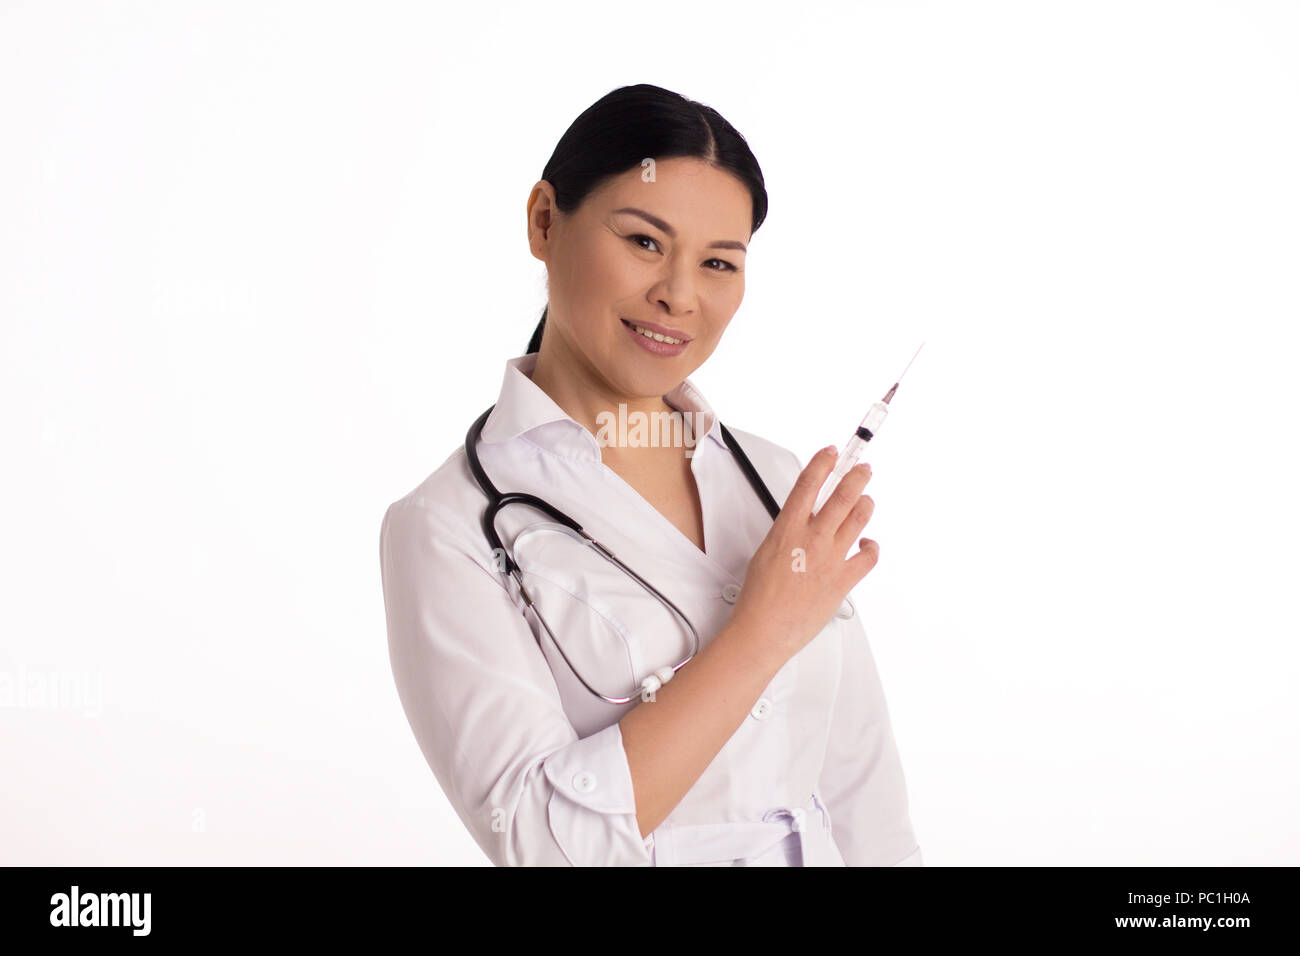 Beautiful nurse in white medical robe Stock Photo by ©VelesStudio 124248438